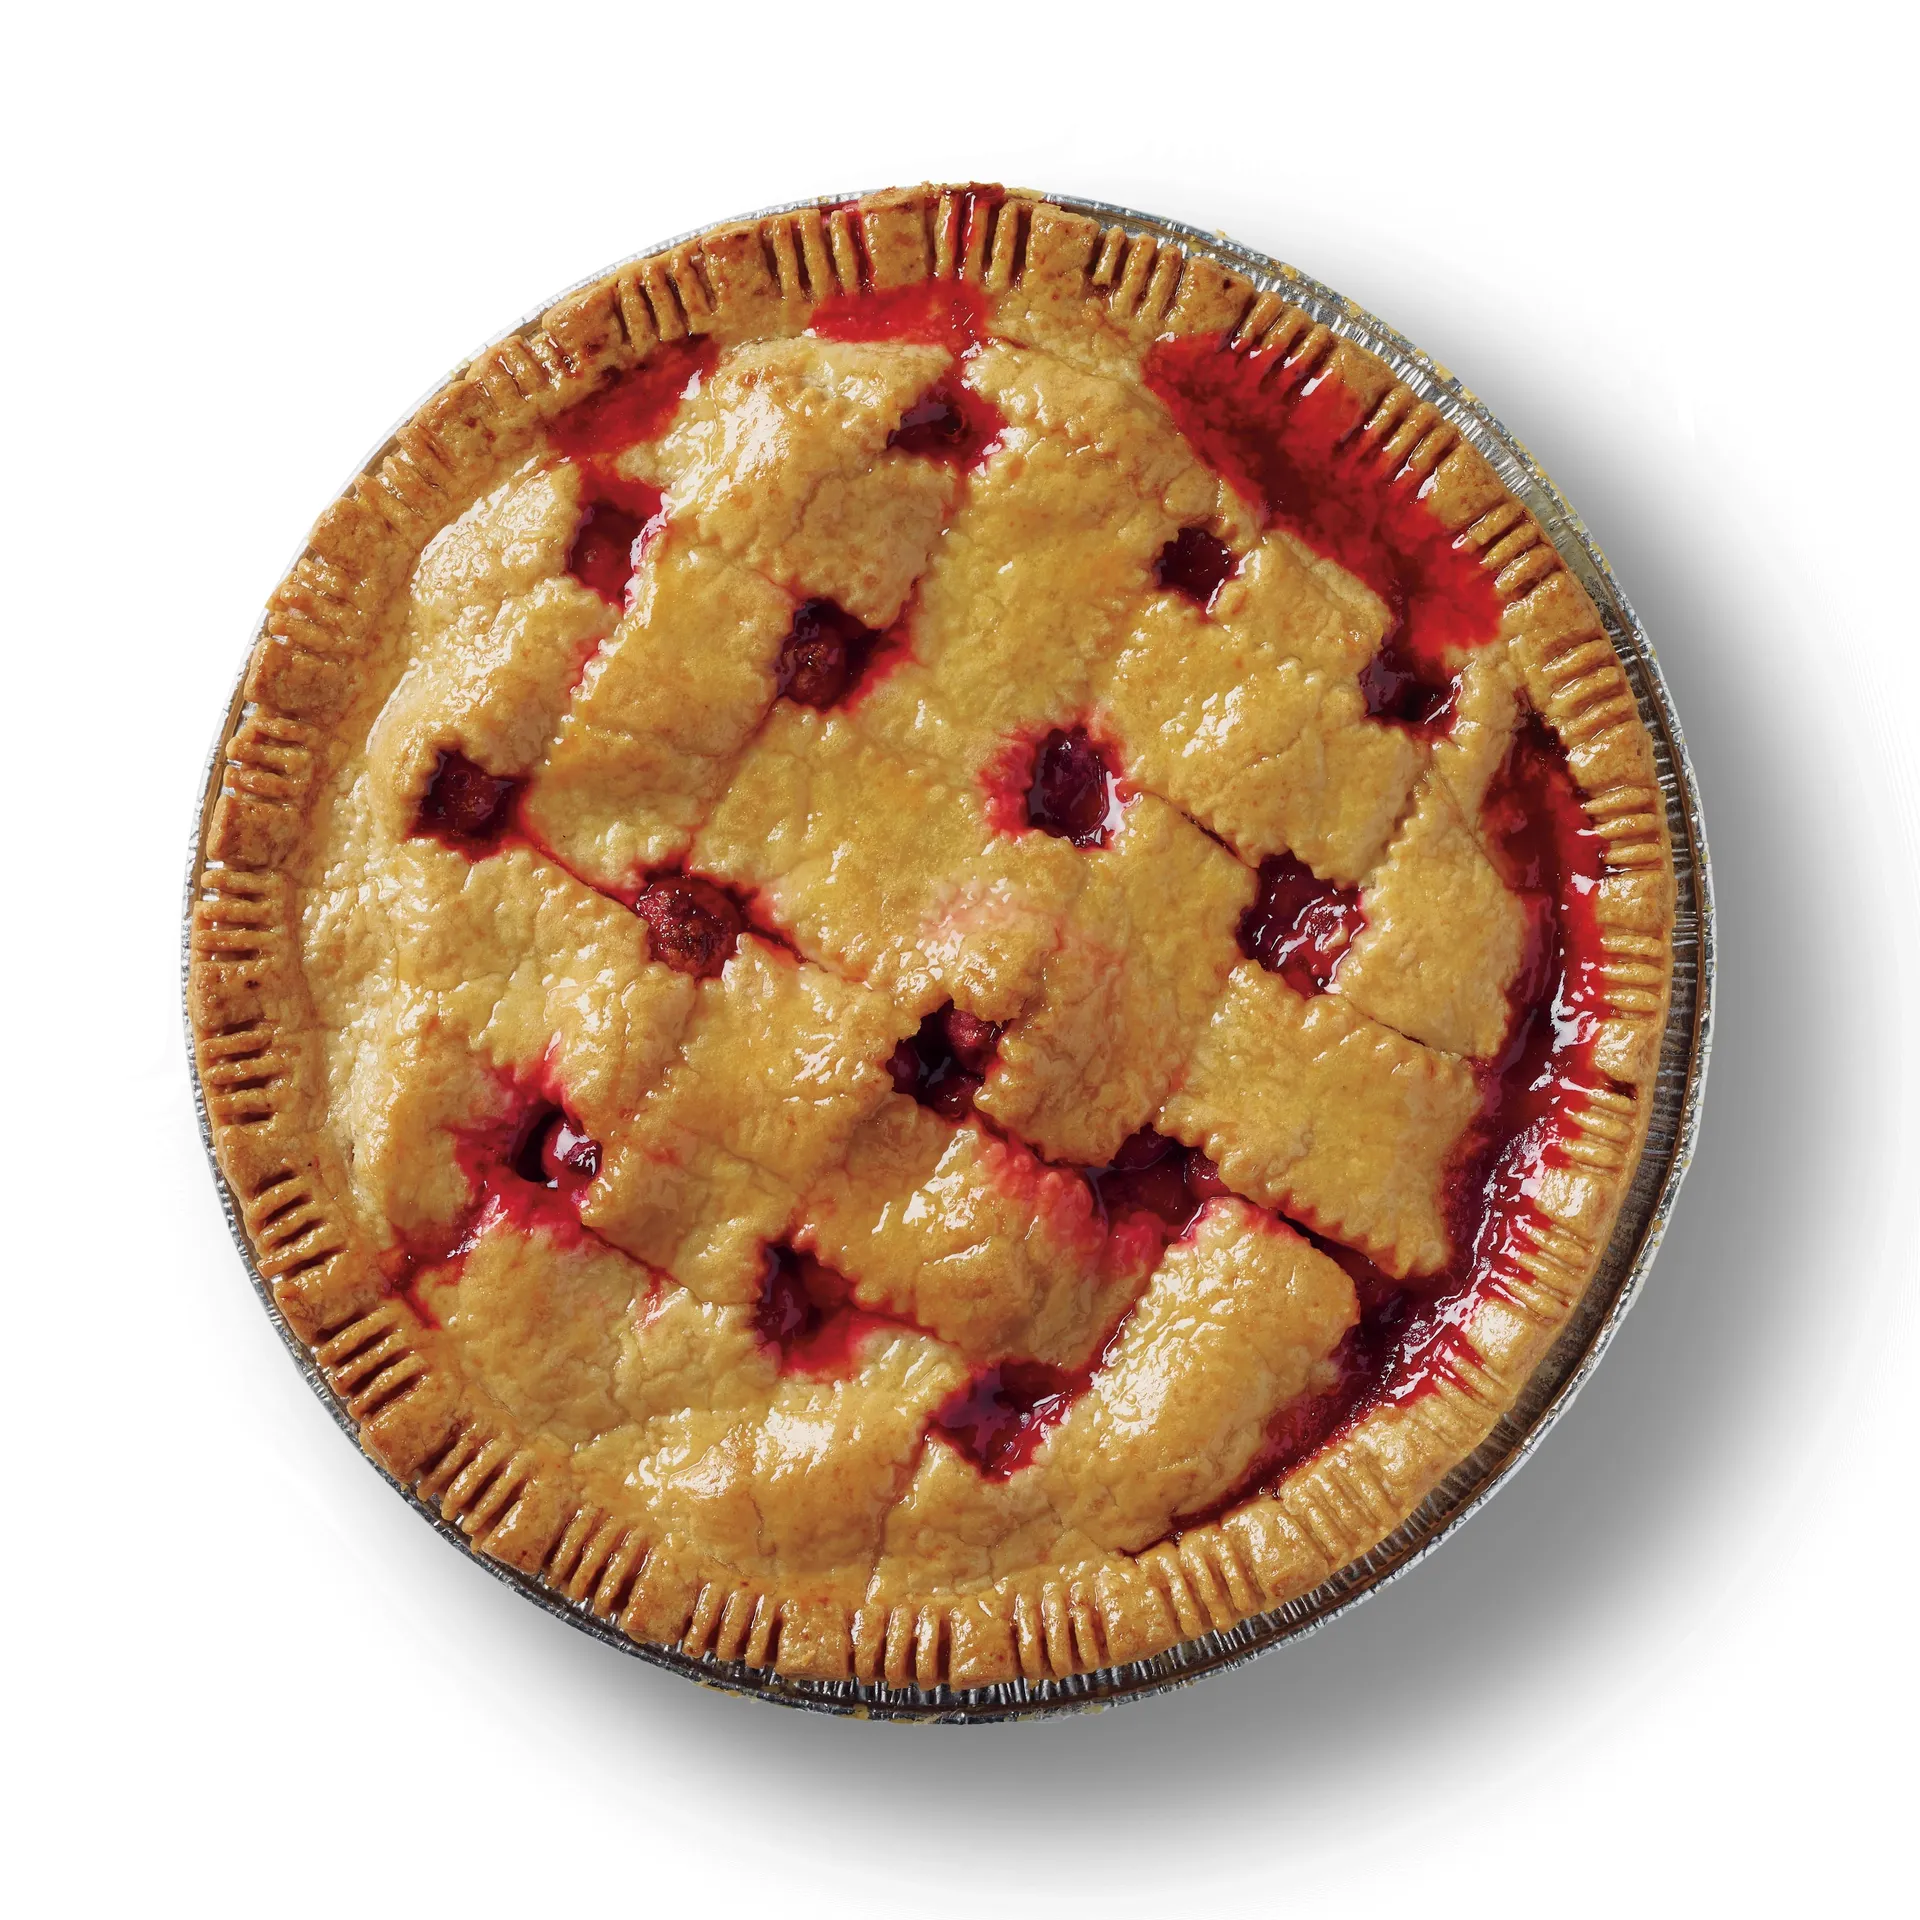 H‑E‑B Bakery Cherry Pie